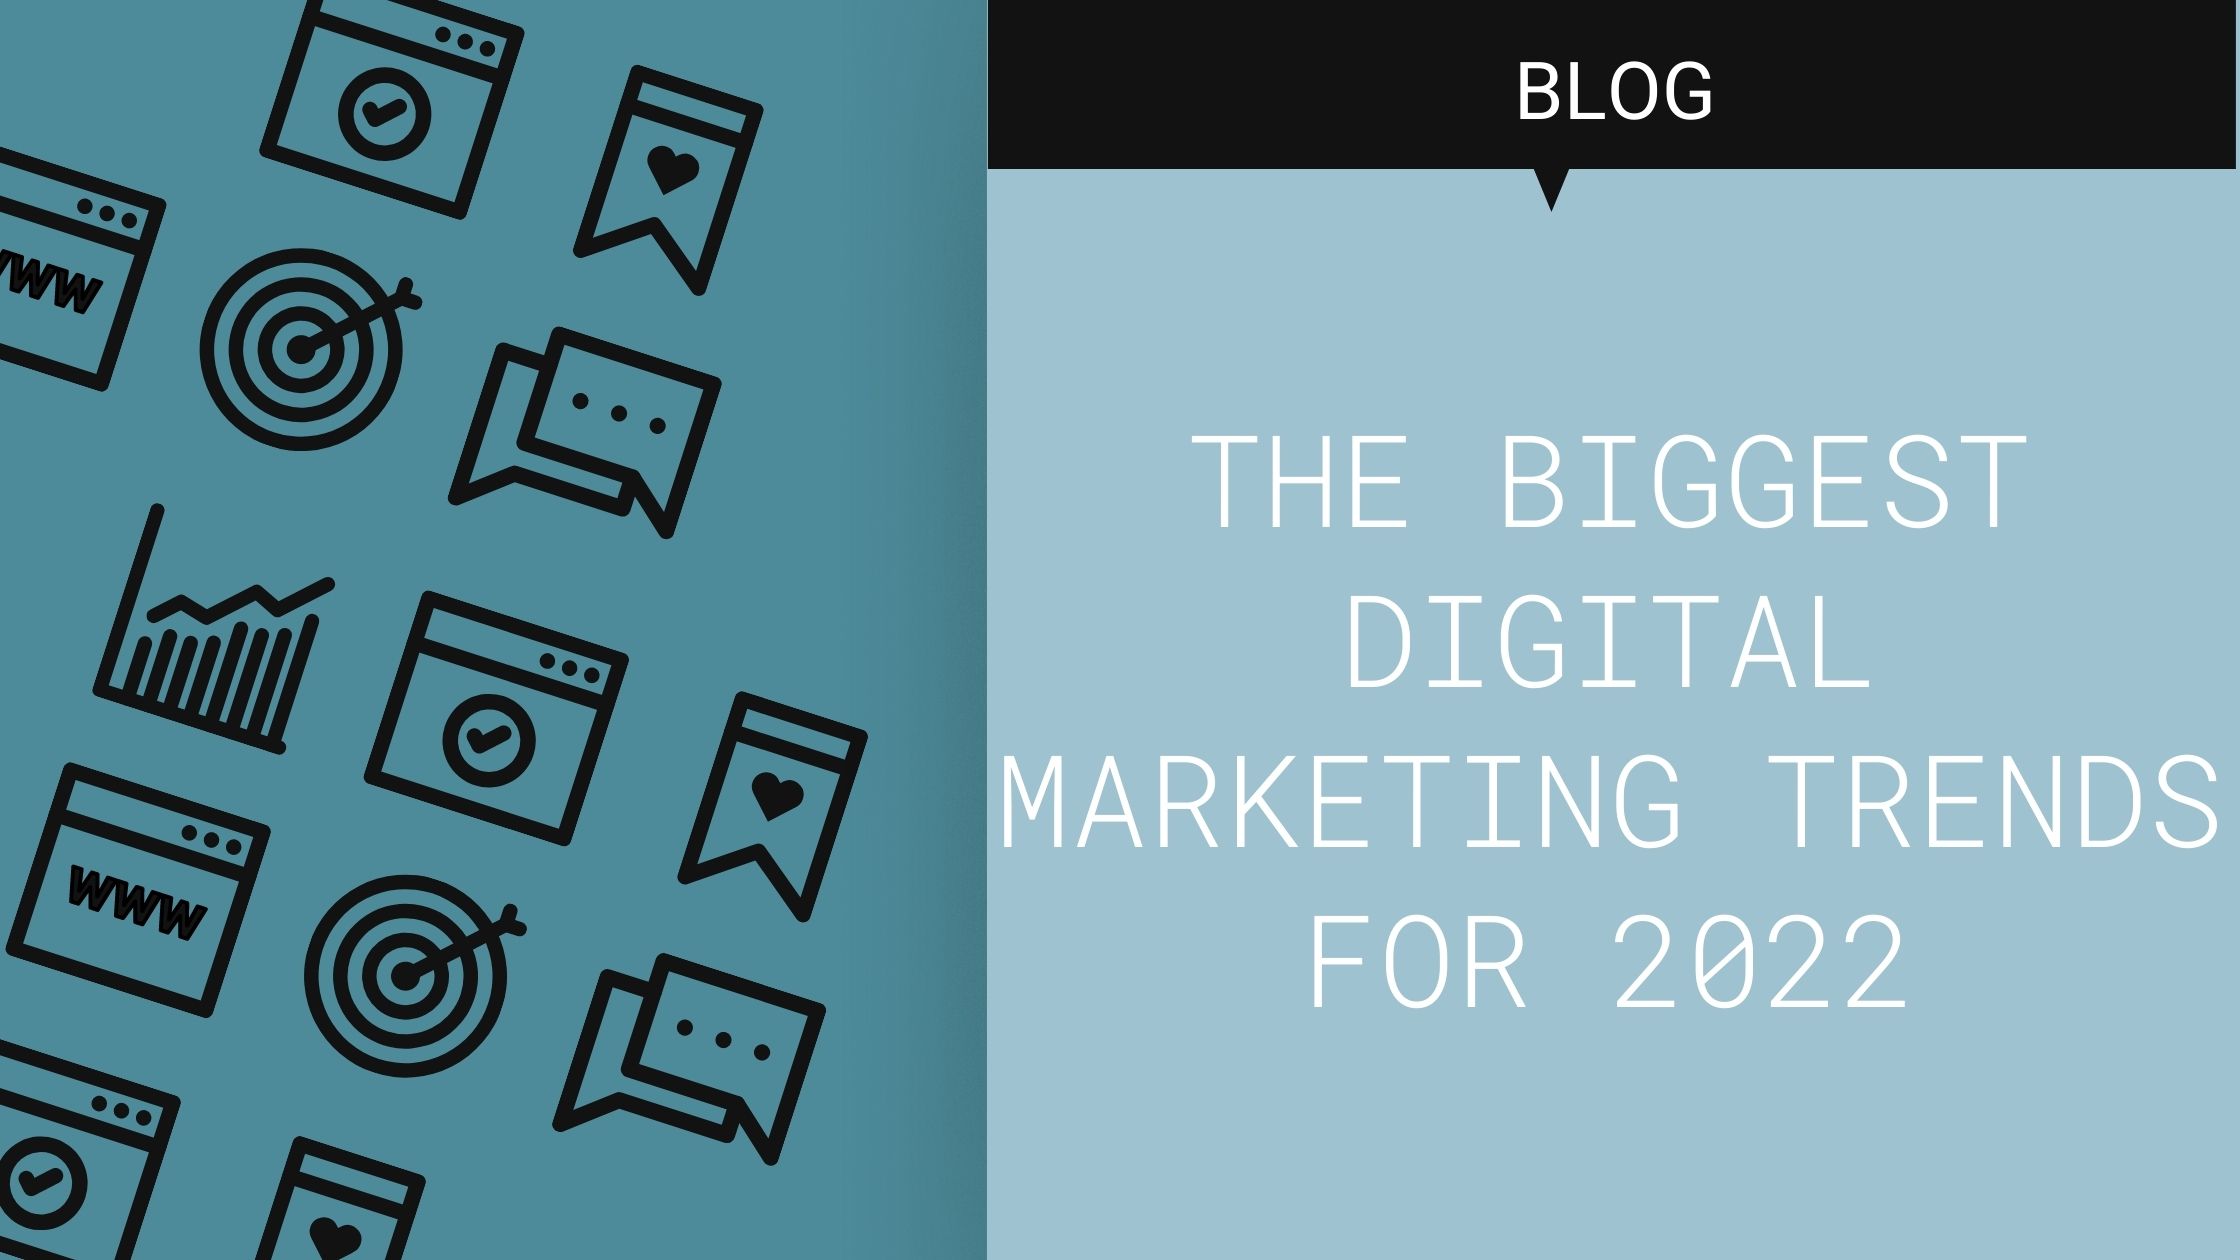 The biggest digital marketing trends for 2022